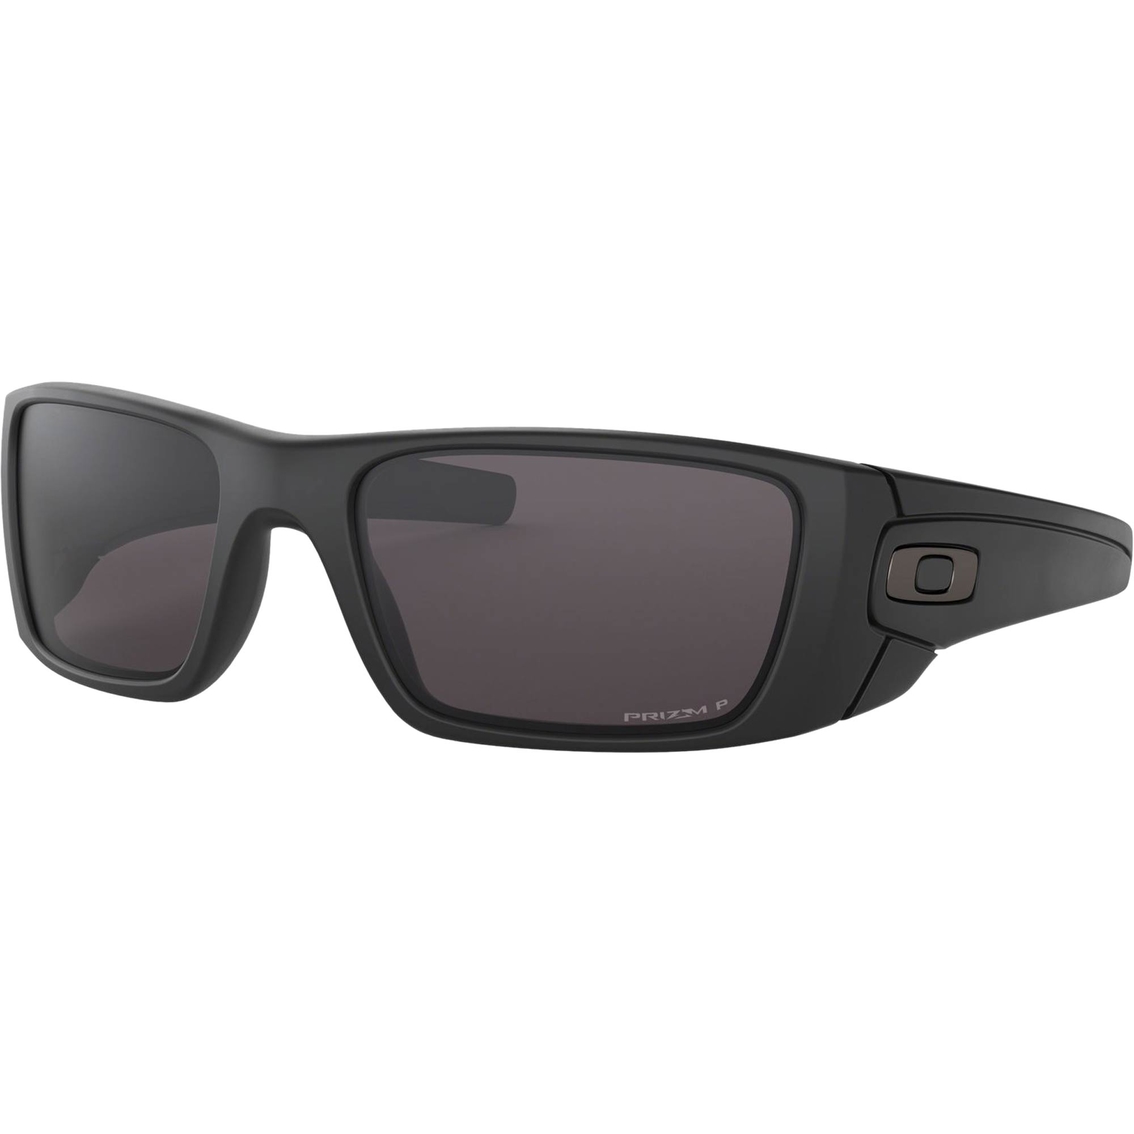 Oakley Fuel Cell Sunglasses Oo9096-j360 | Men's Sunglasses | Swim Shop ...